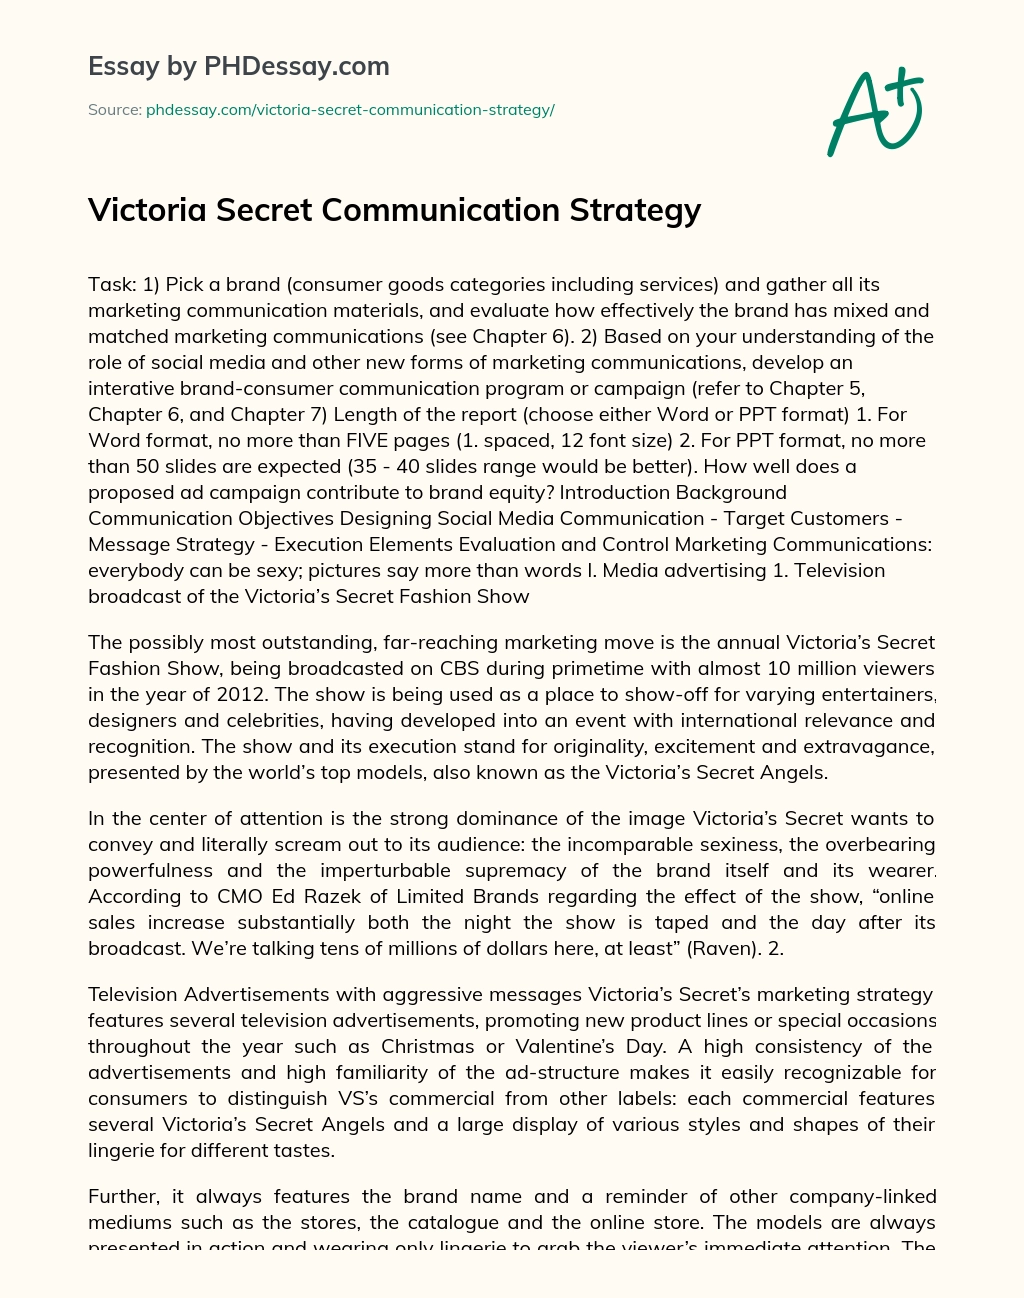 Victoria Secret Communication Strategy essay